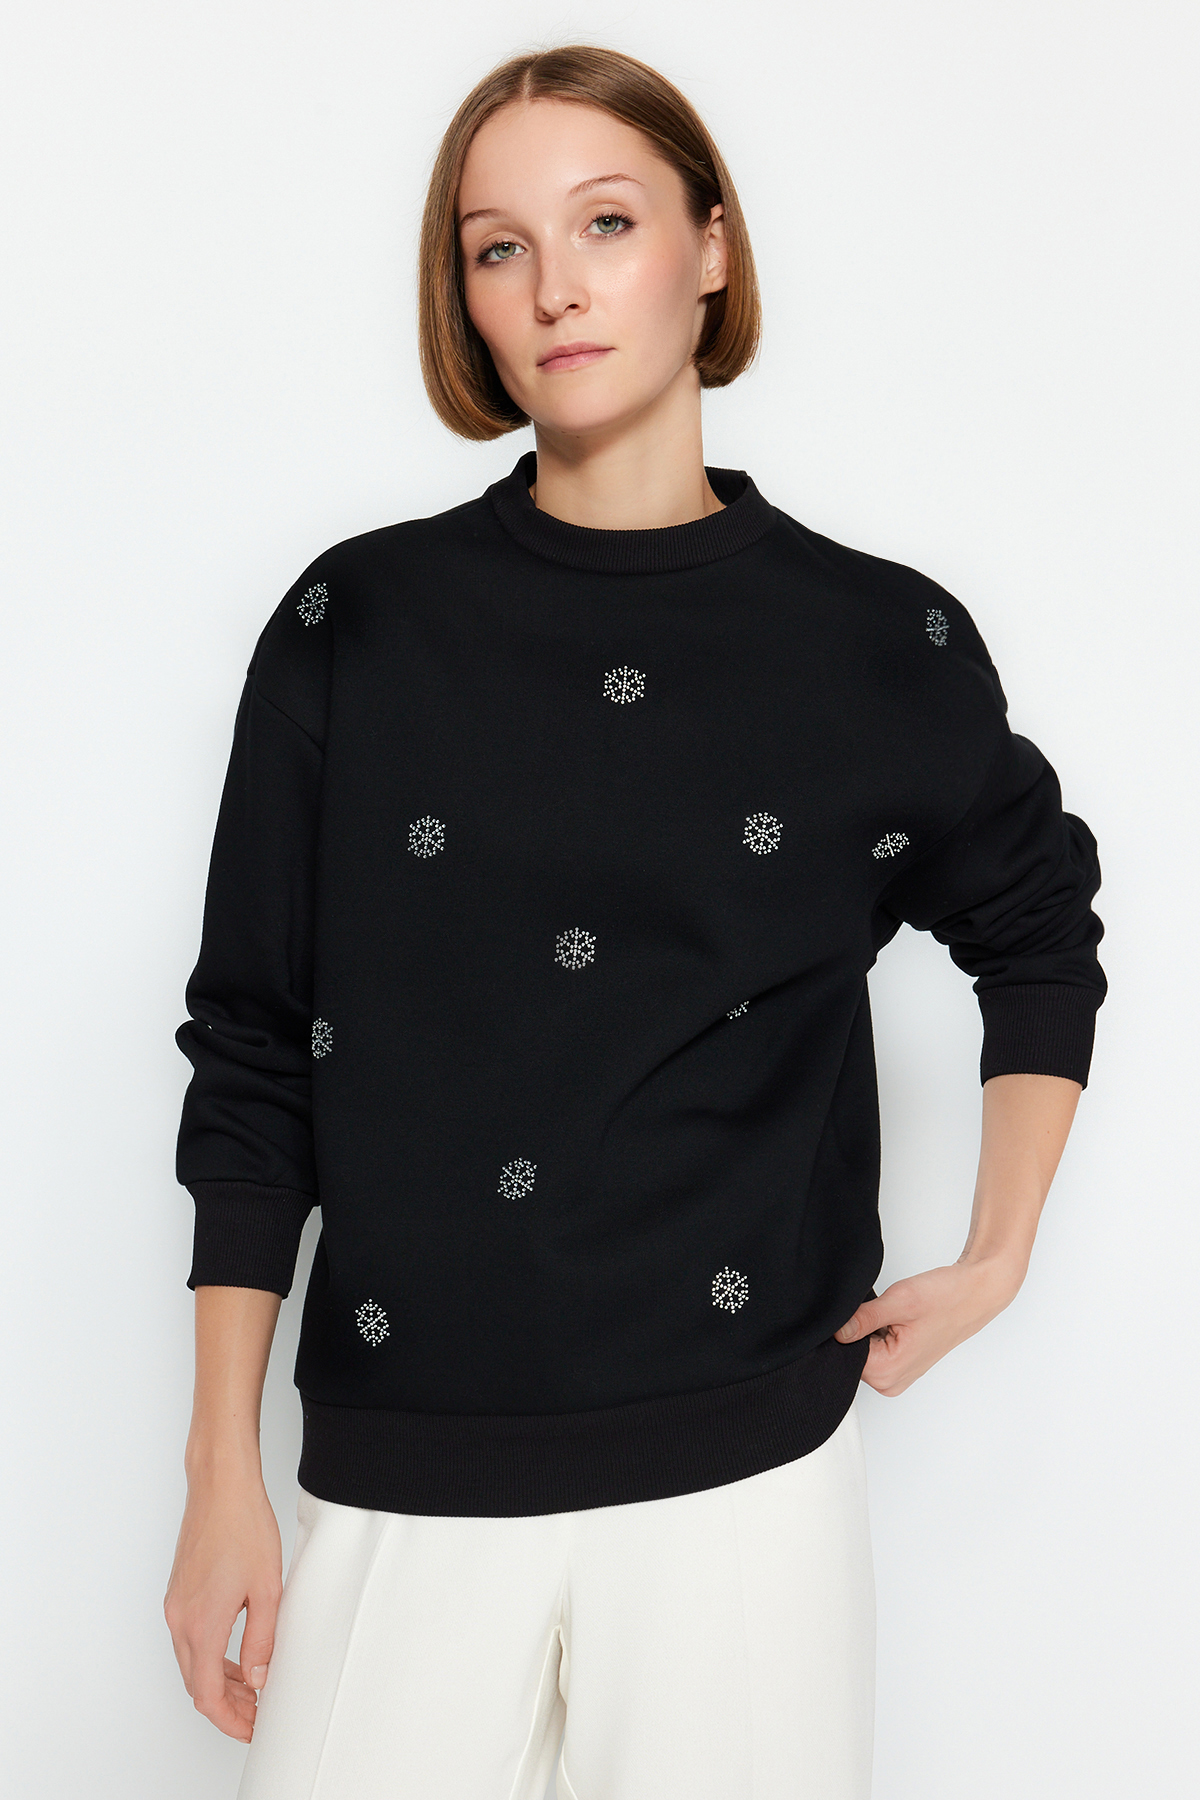 Trendyol Black Thick Fleece Inside, Stone Accessory Detail, Regular/Normal Knitted Sweatshirt